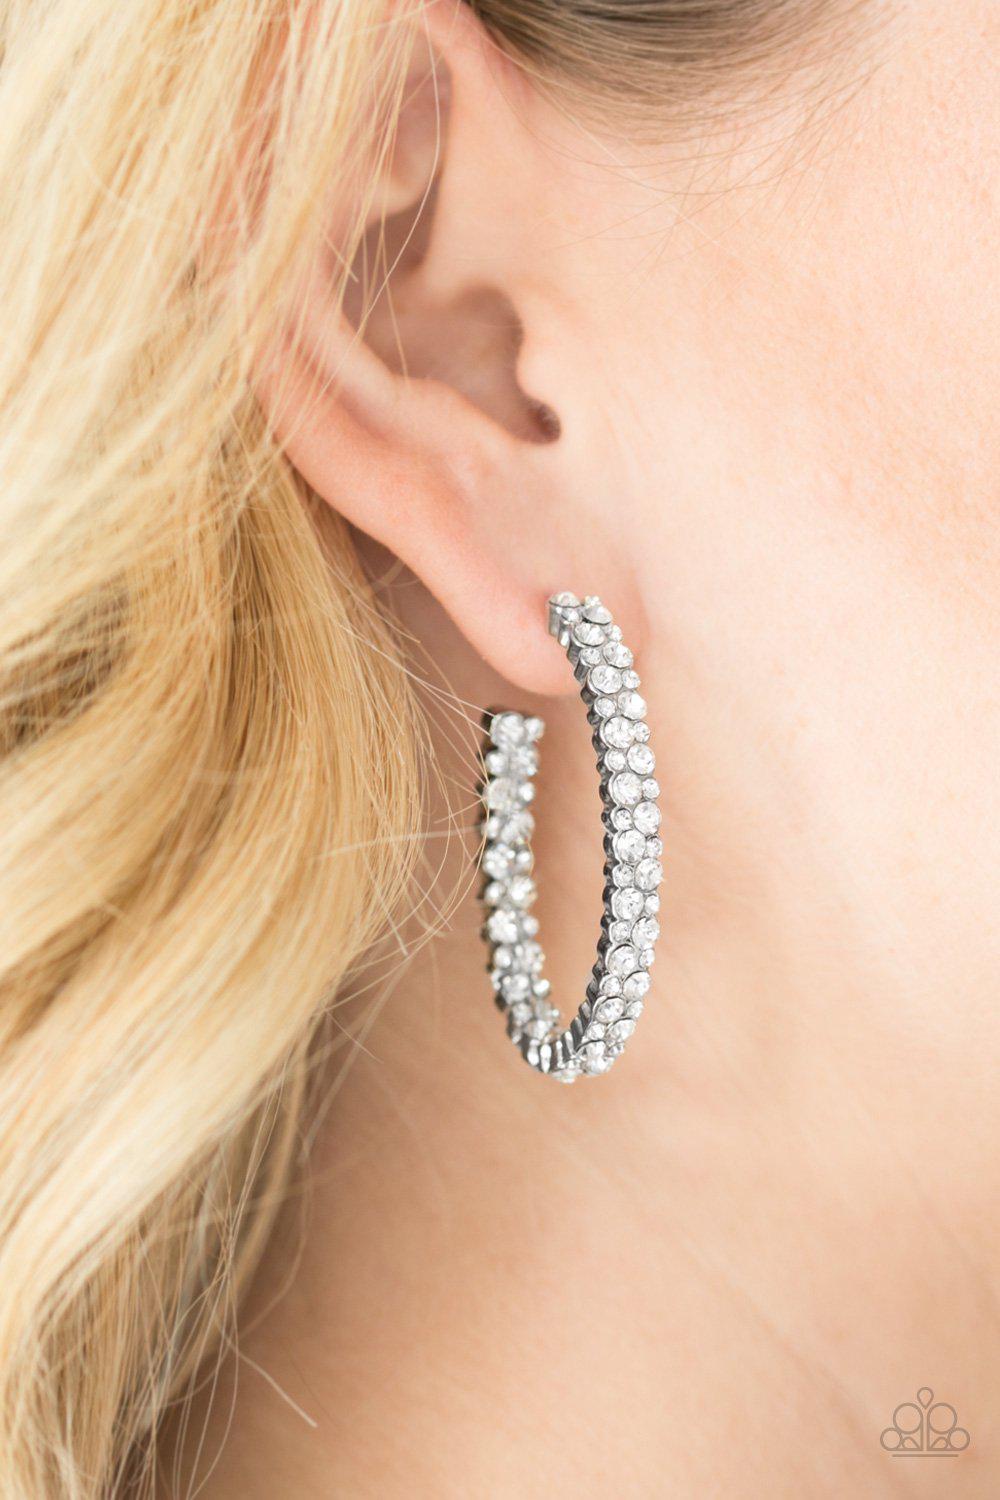 Debonaire Dazzle White Rhinestone Hoop Earrings - Paparazzi Accessories-CarasShop.com - $5 Jewelry by Cara Jewels